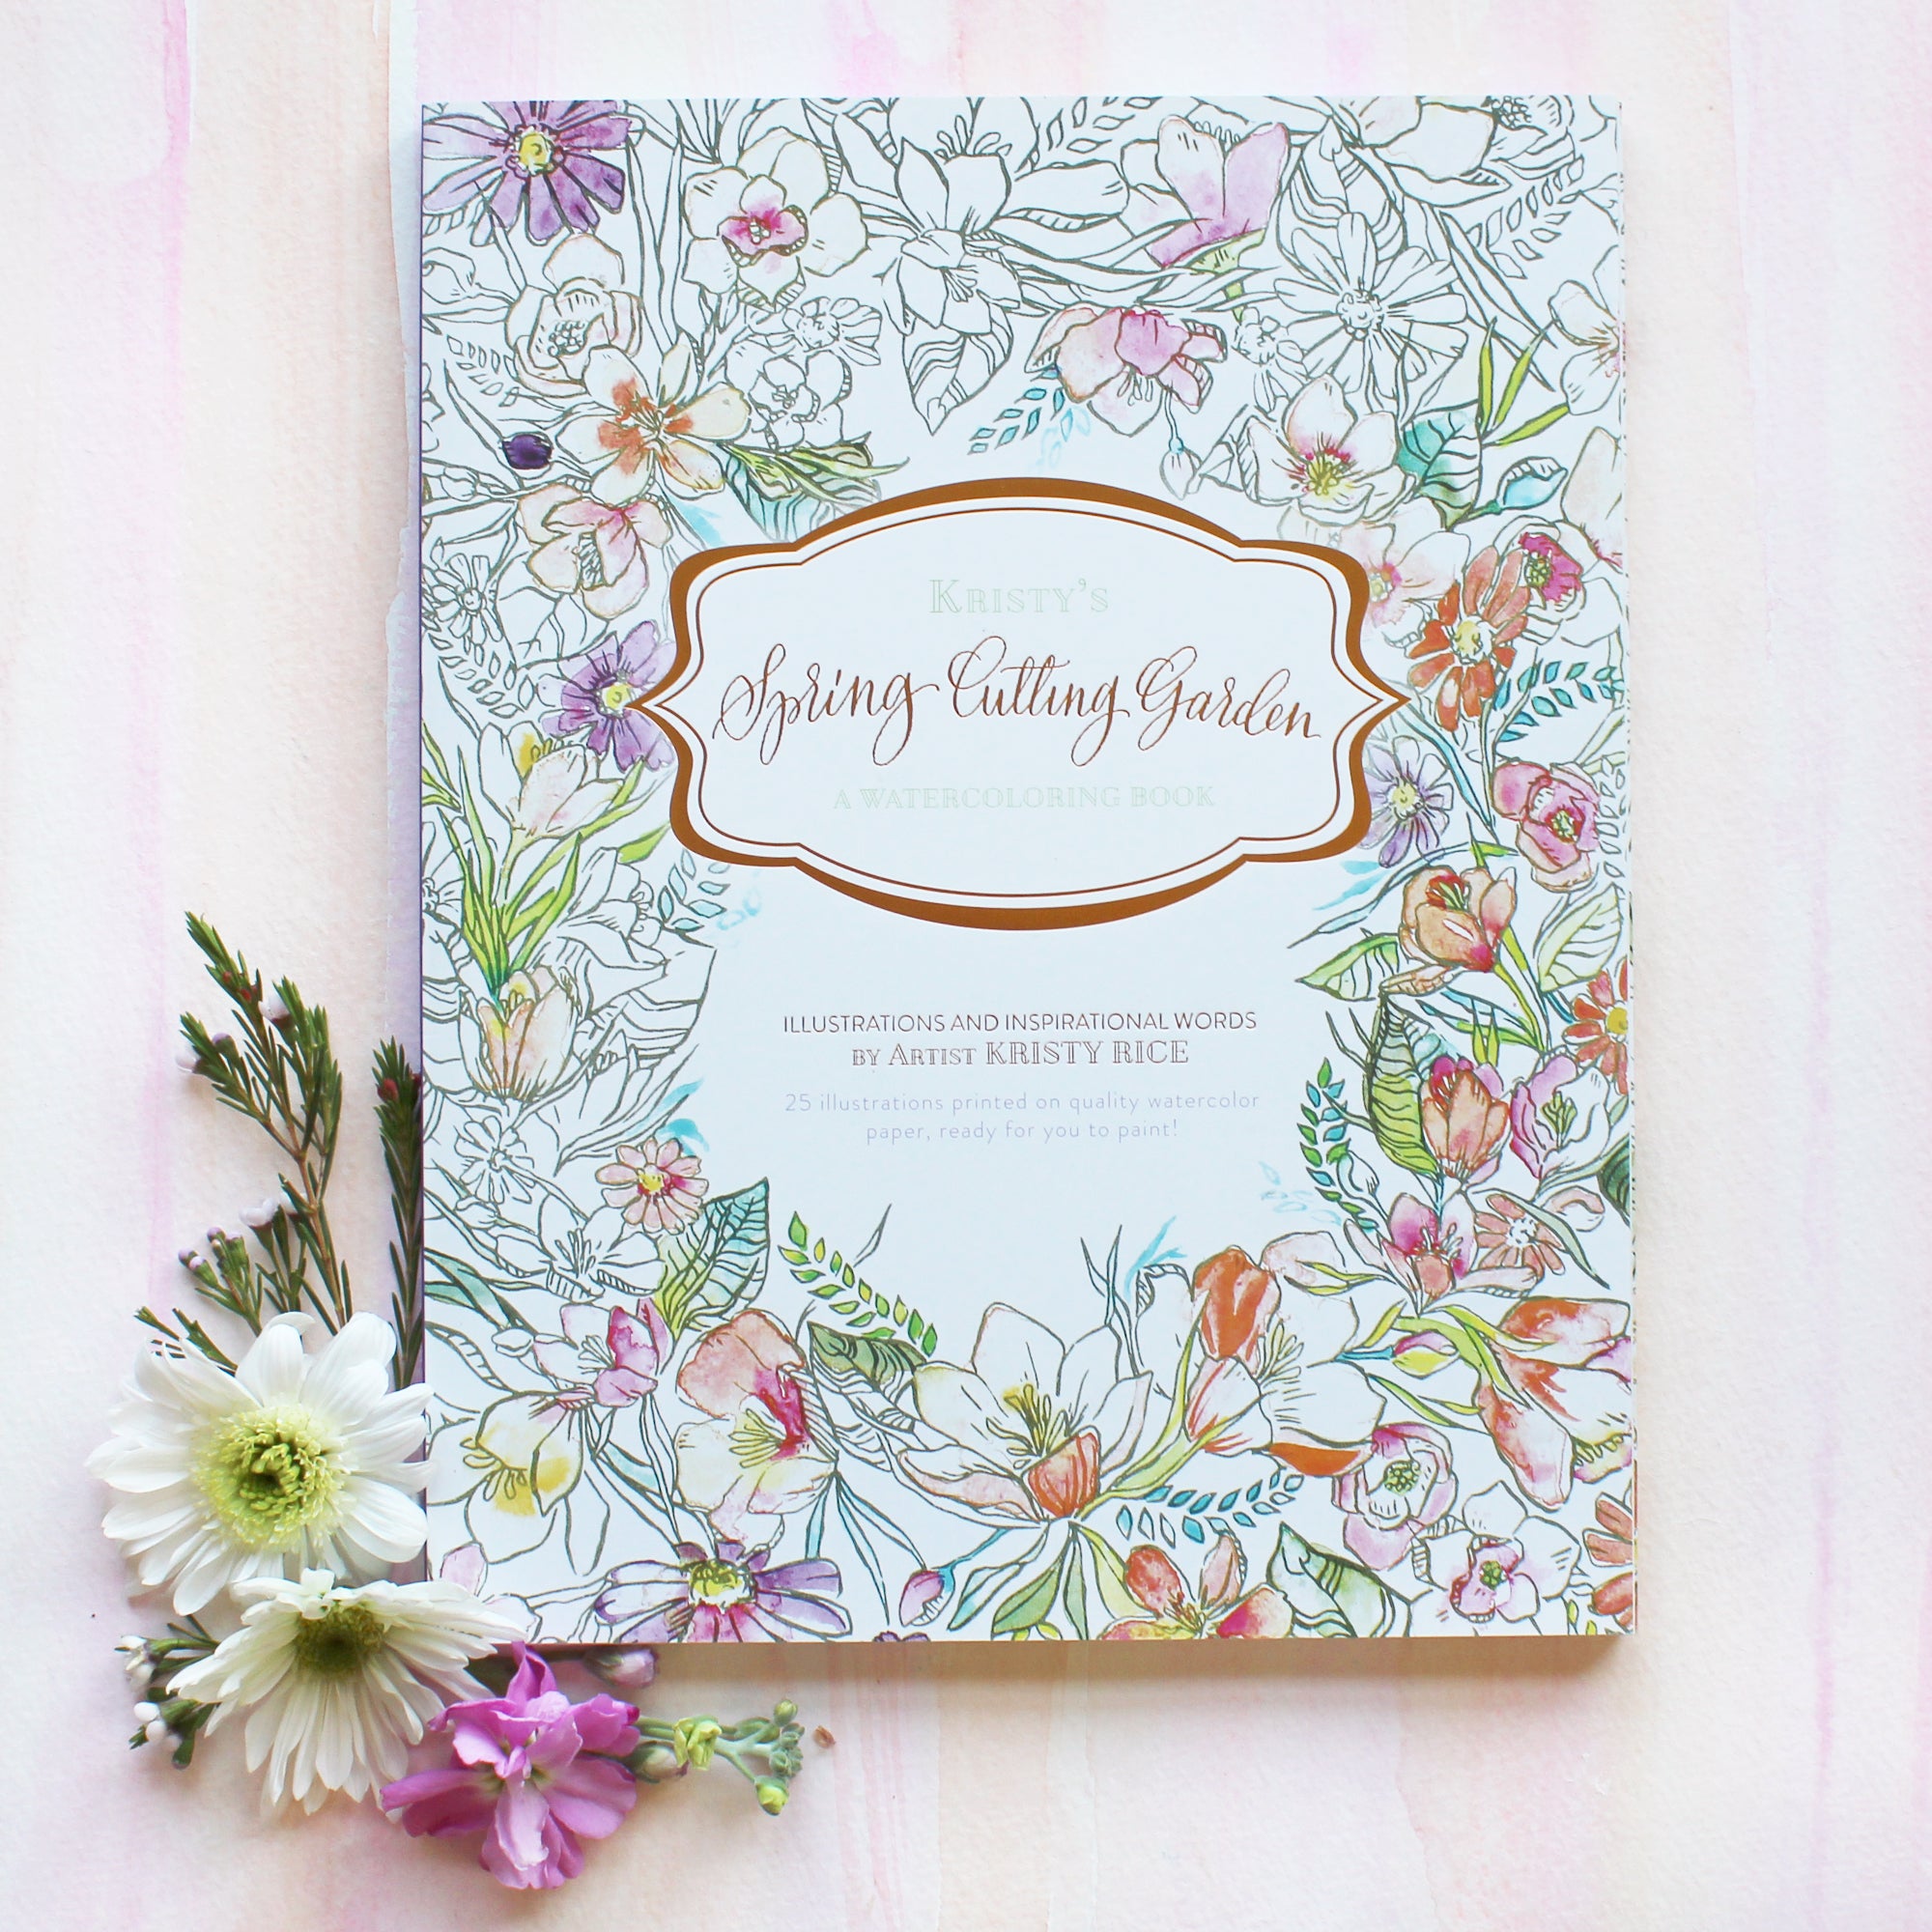 Kristy's Spring Cutting Garden: A Watercoloring Book [Book]